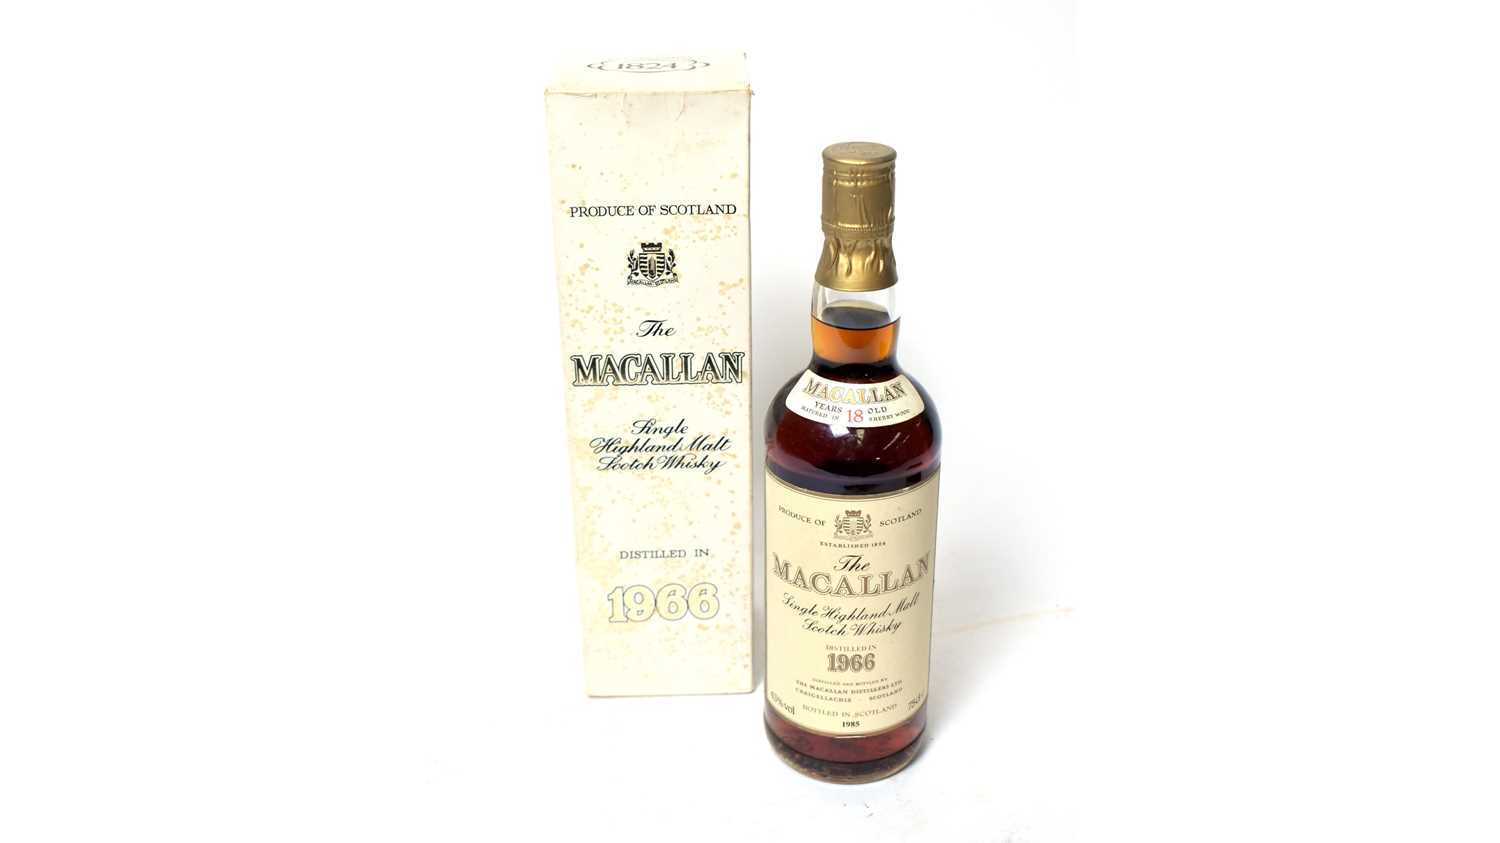 Lot 631 - The Macallan Single Highland Malt Scotch Whisky 1966 18 years old